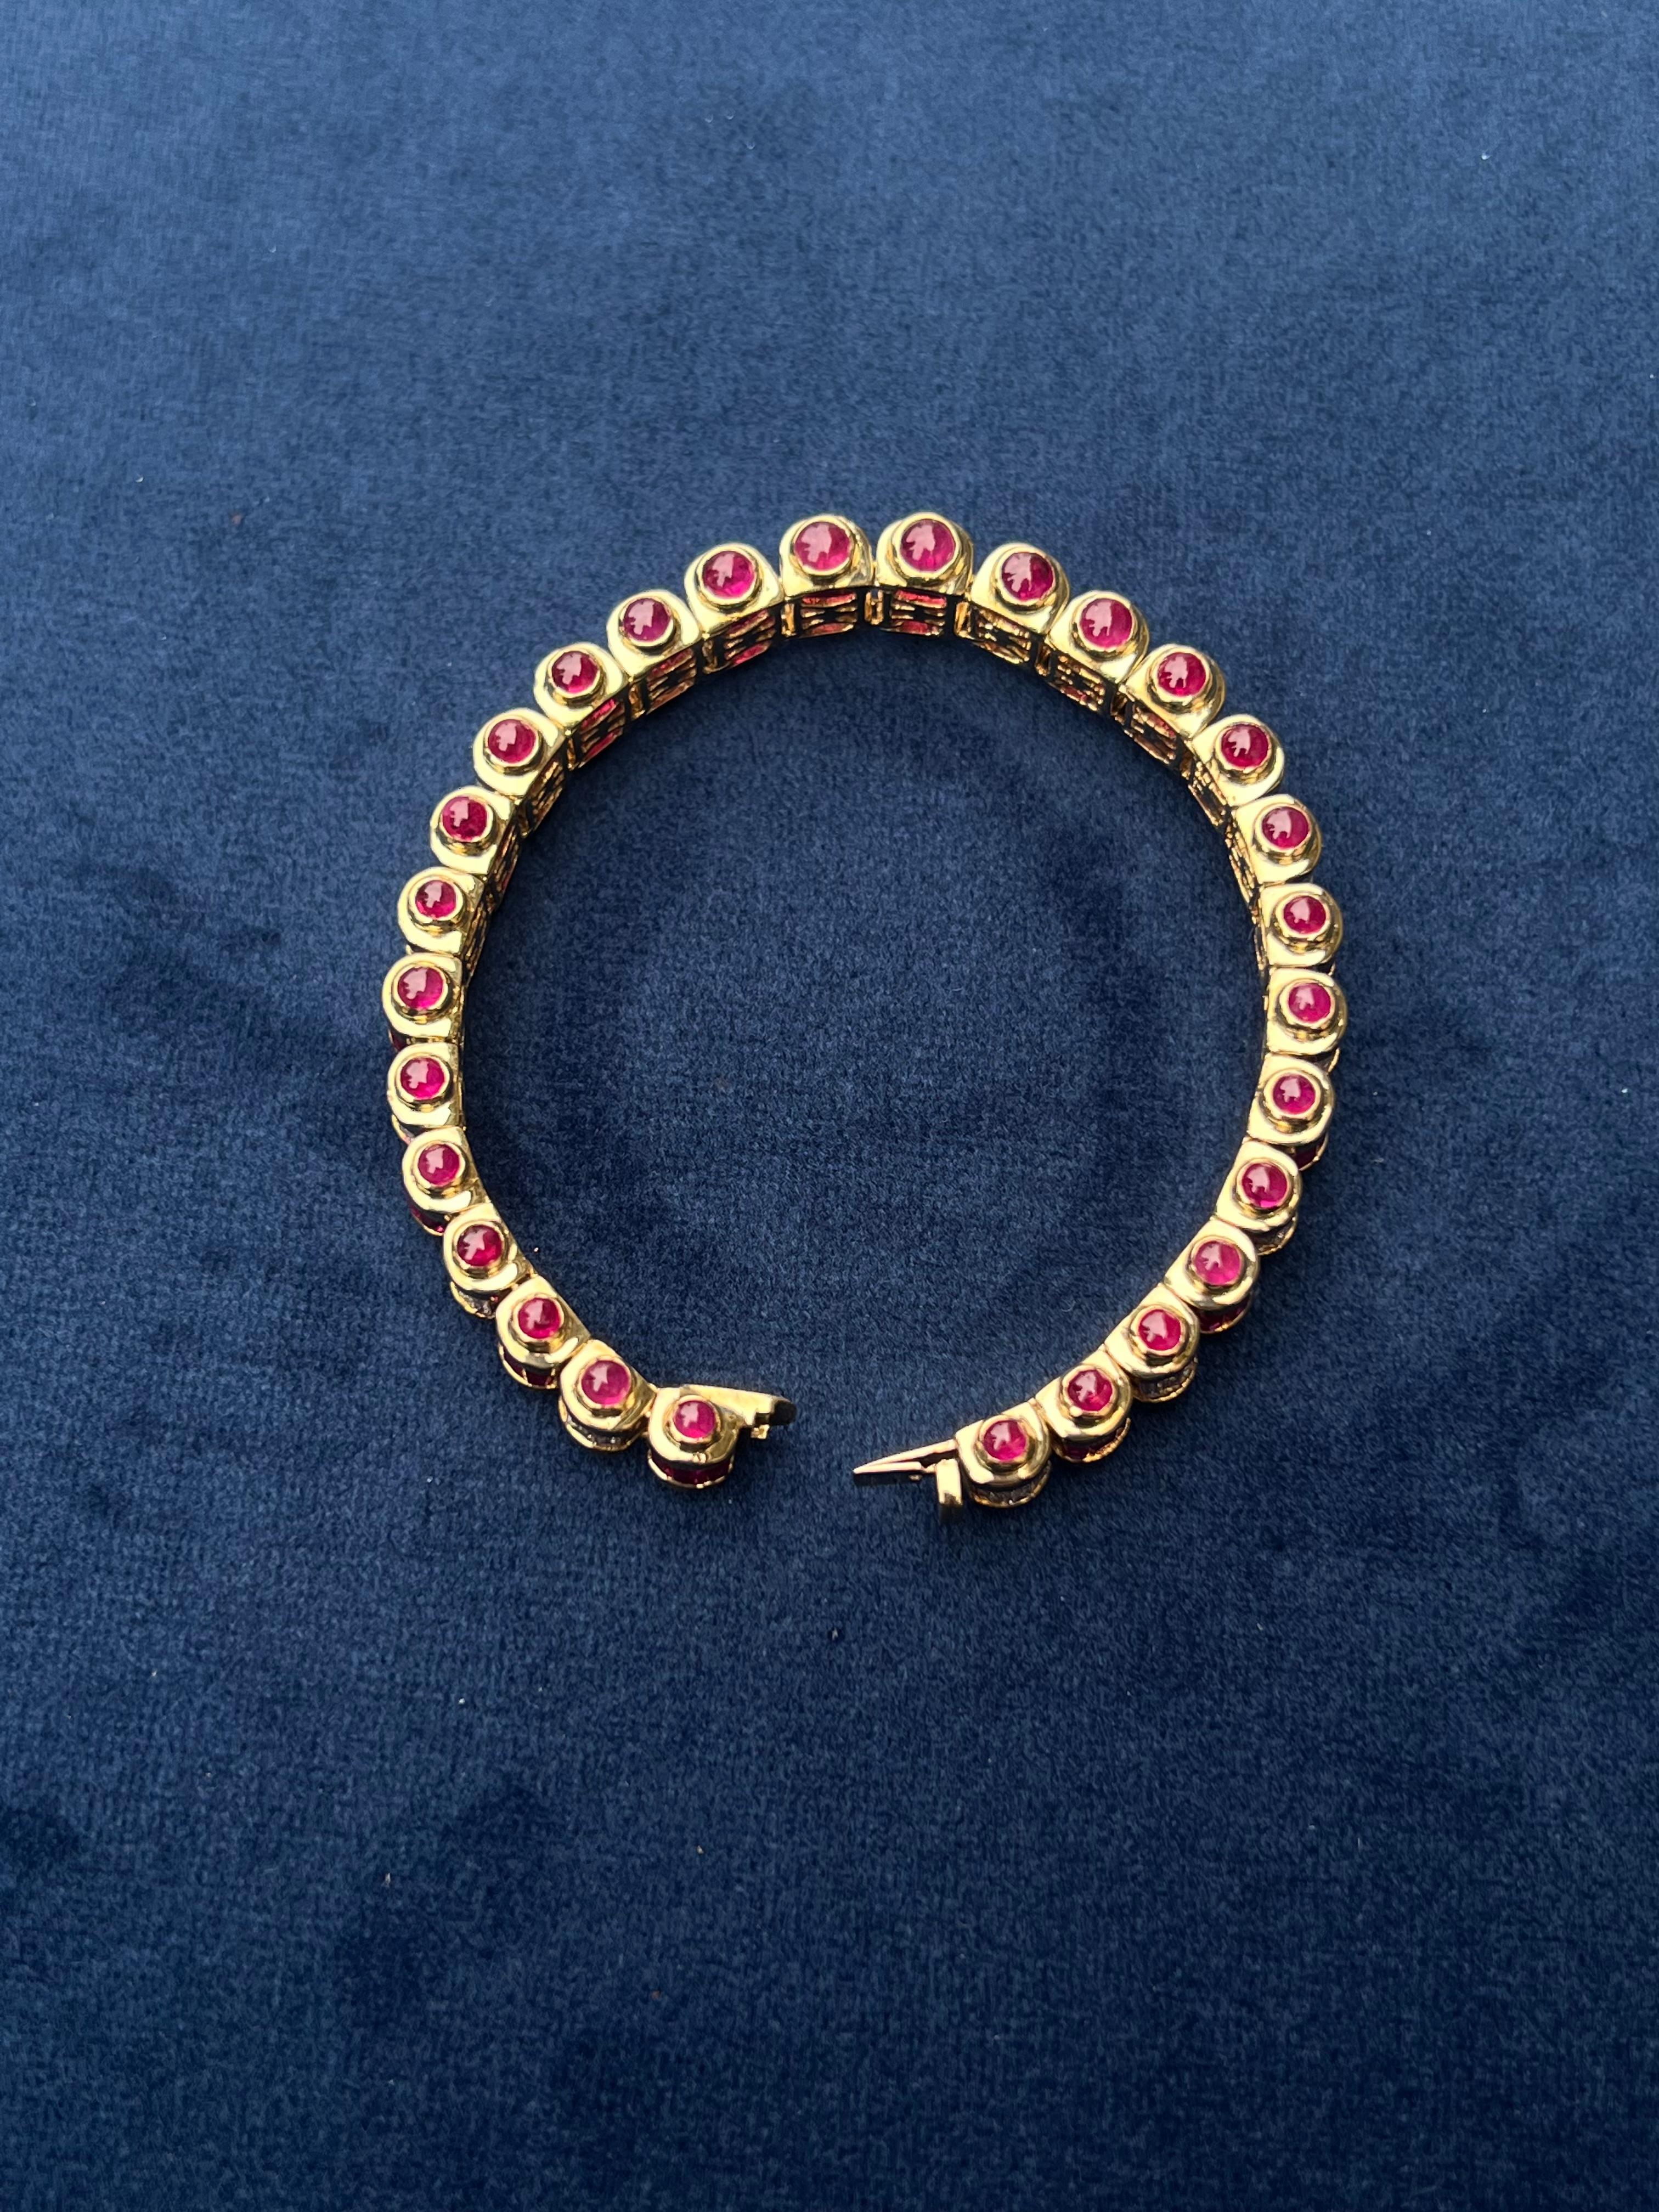 Very Regal 32 Carat Art Deco Style Burmese Ruby and Diamond Bracelet !8K Gold 1